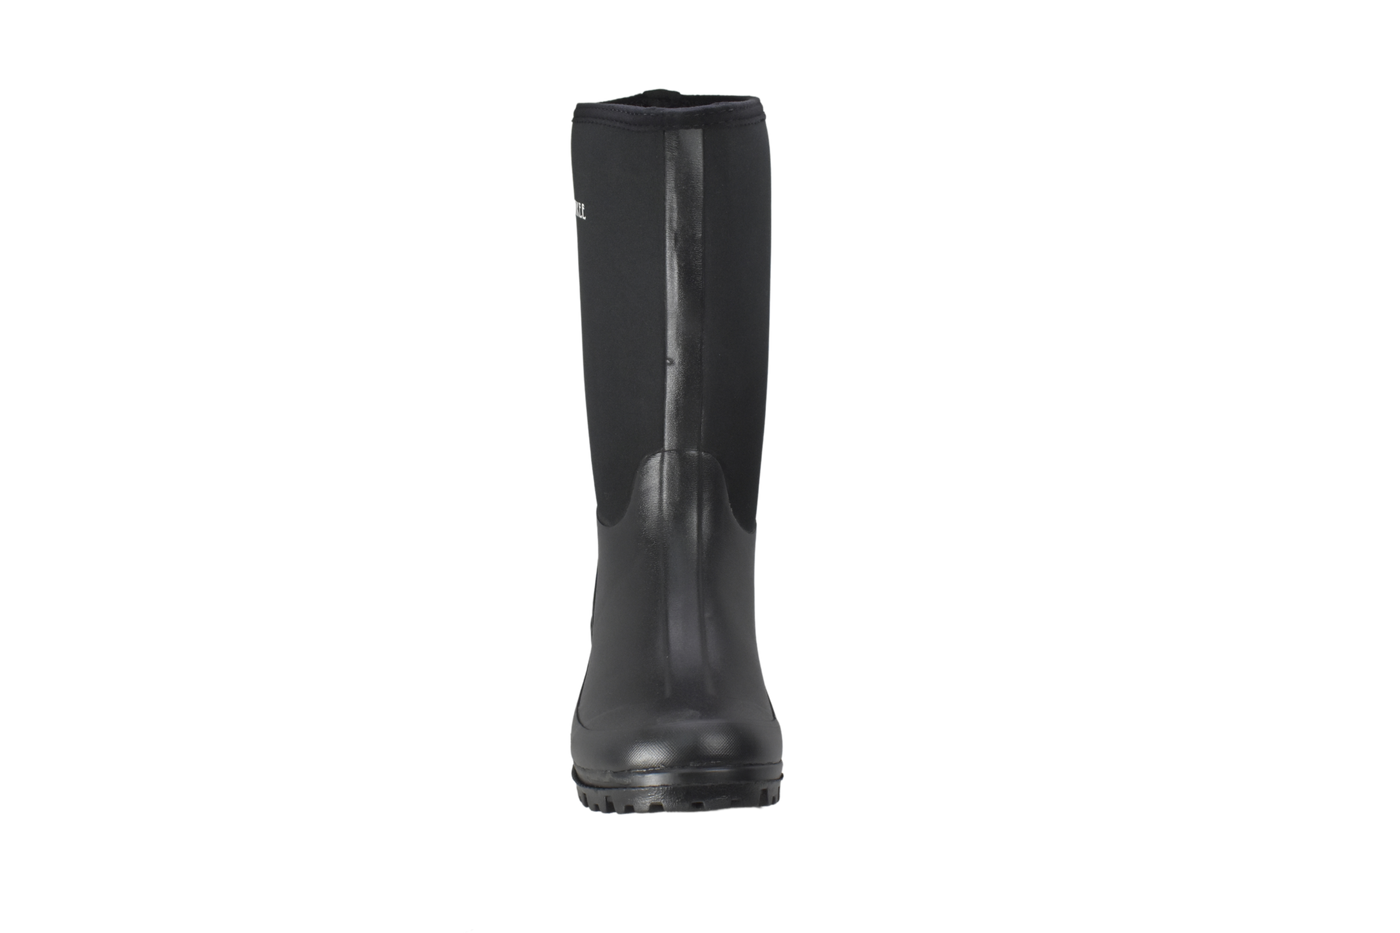 Men's Black Neoprene Rubber Boot - Shop Genuine Leather men & women's boots online | AdTecFootWear